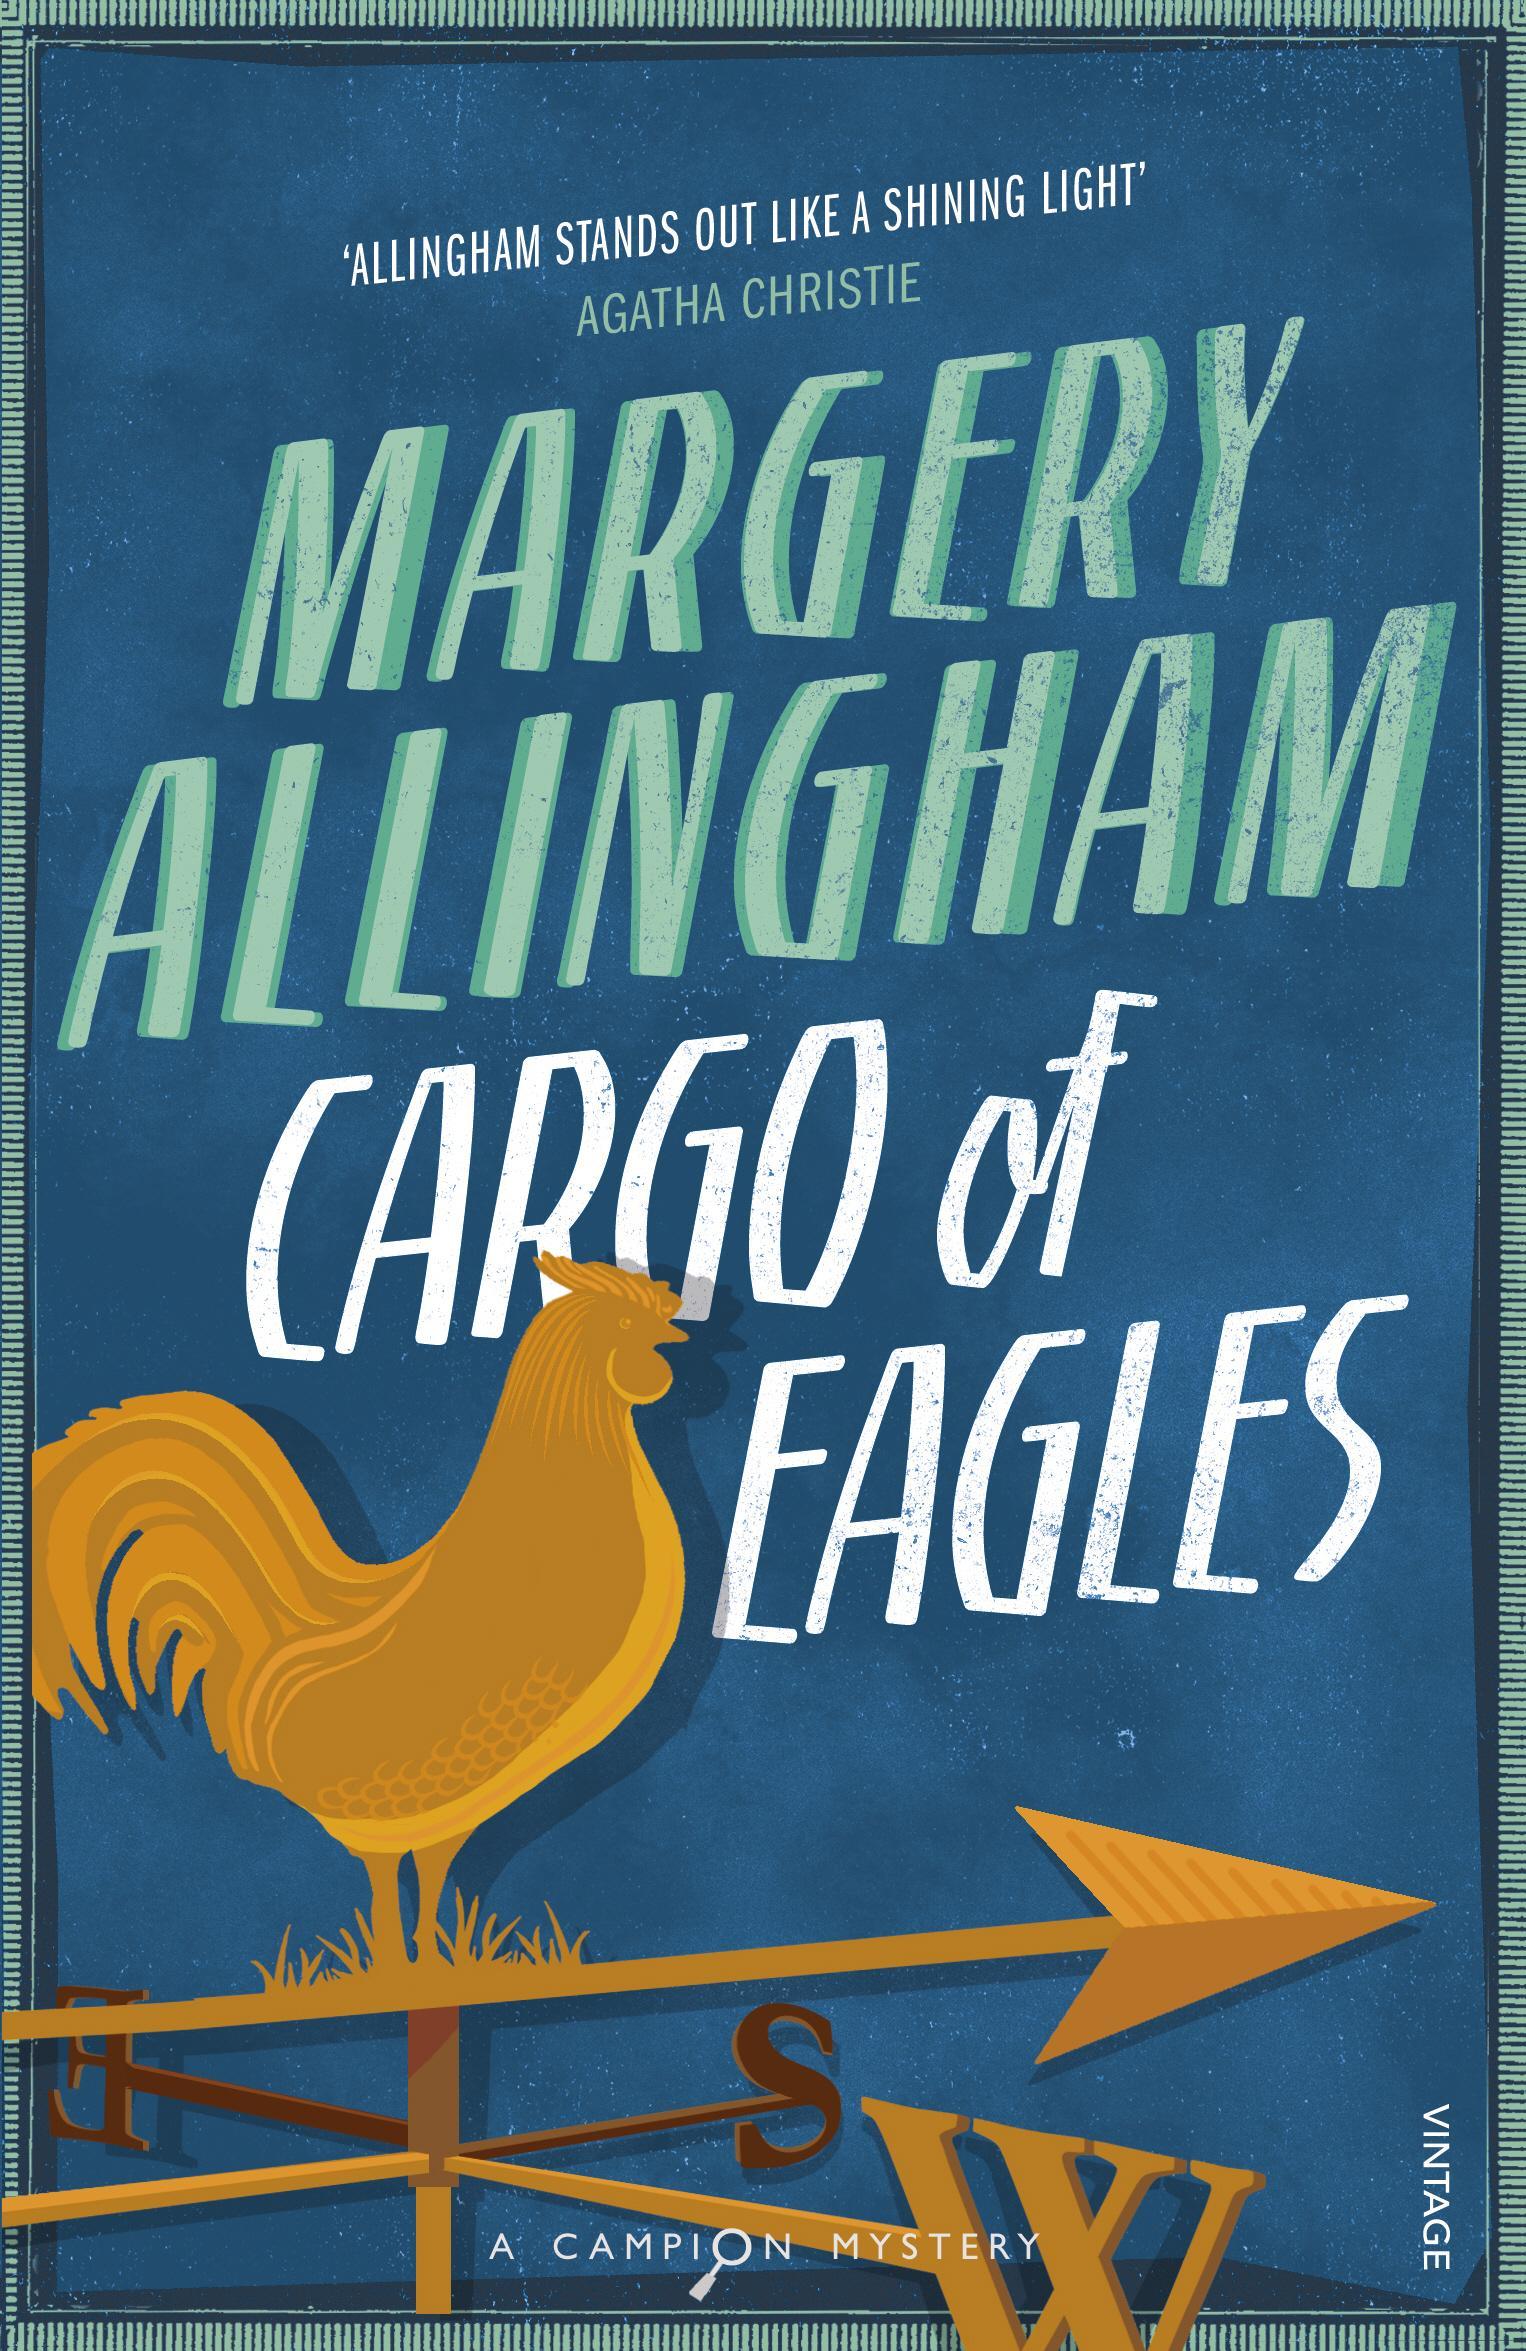 Cargo Of Eagles - Margery Allingham